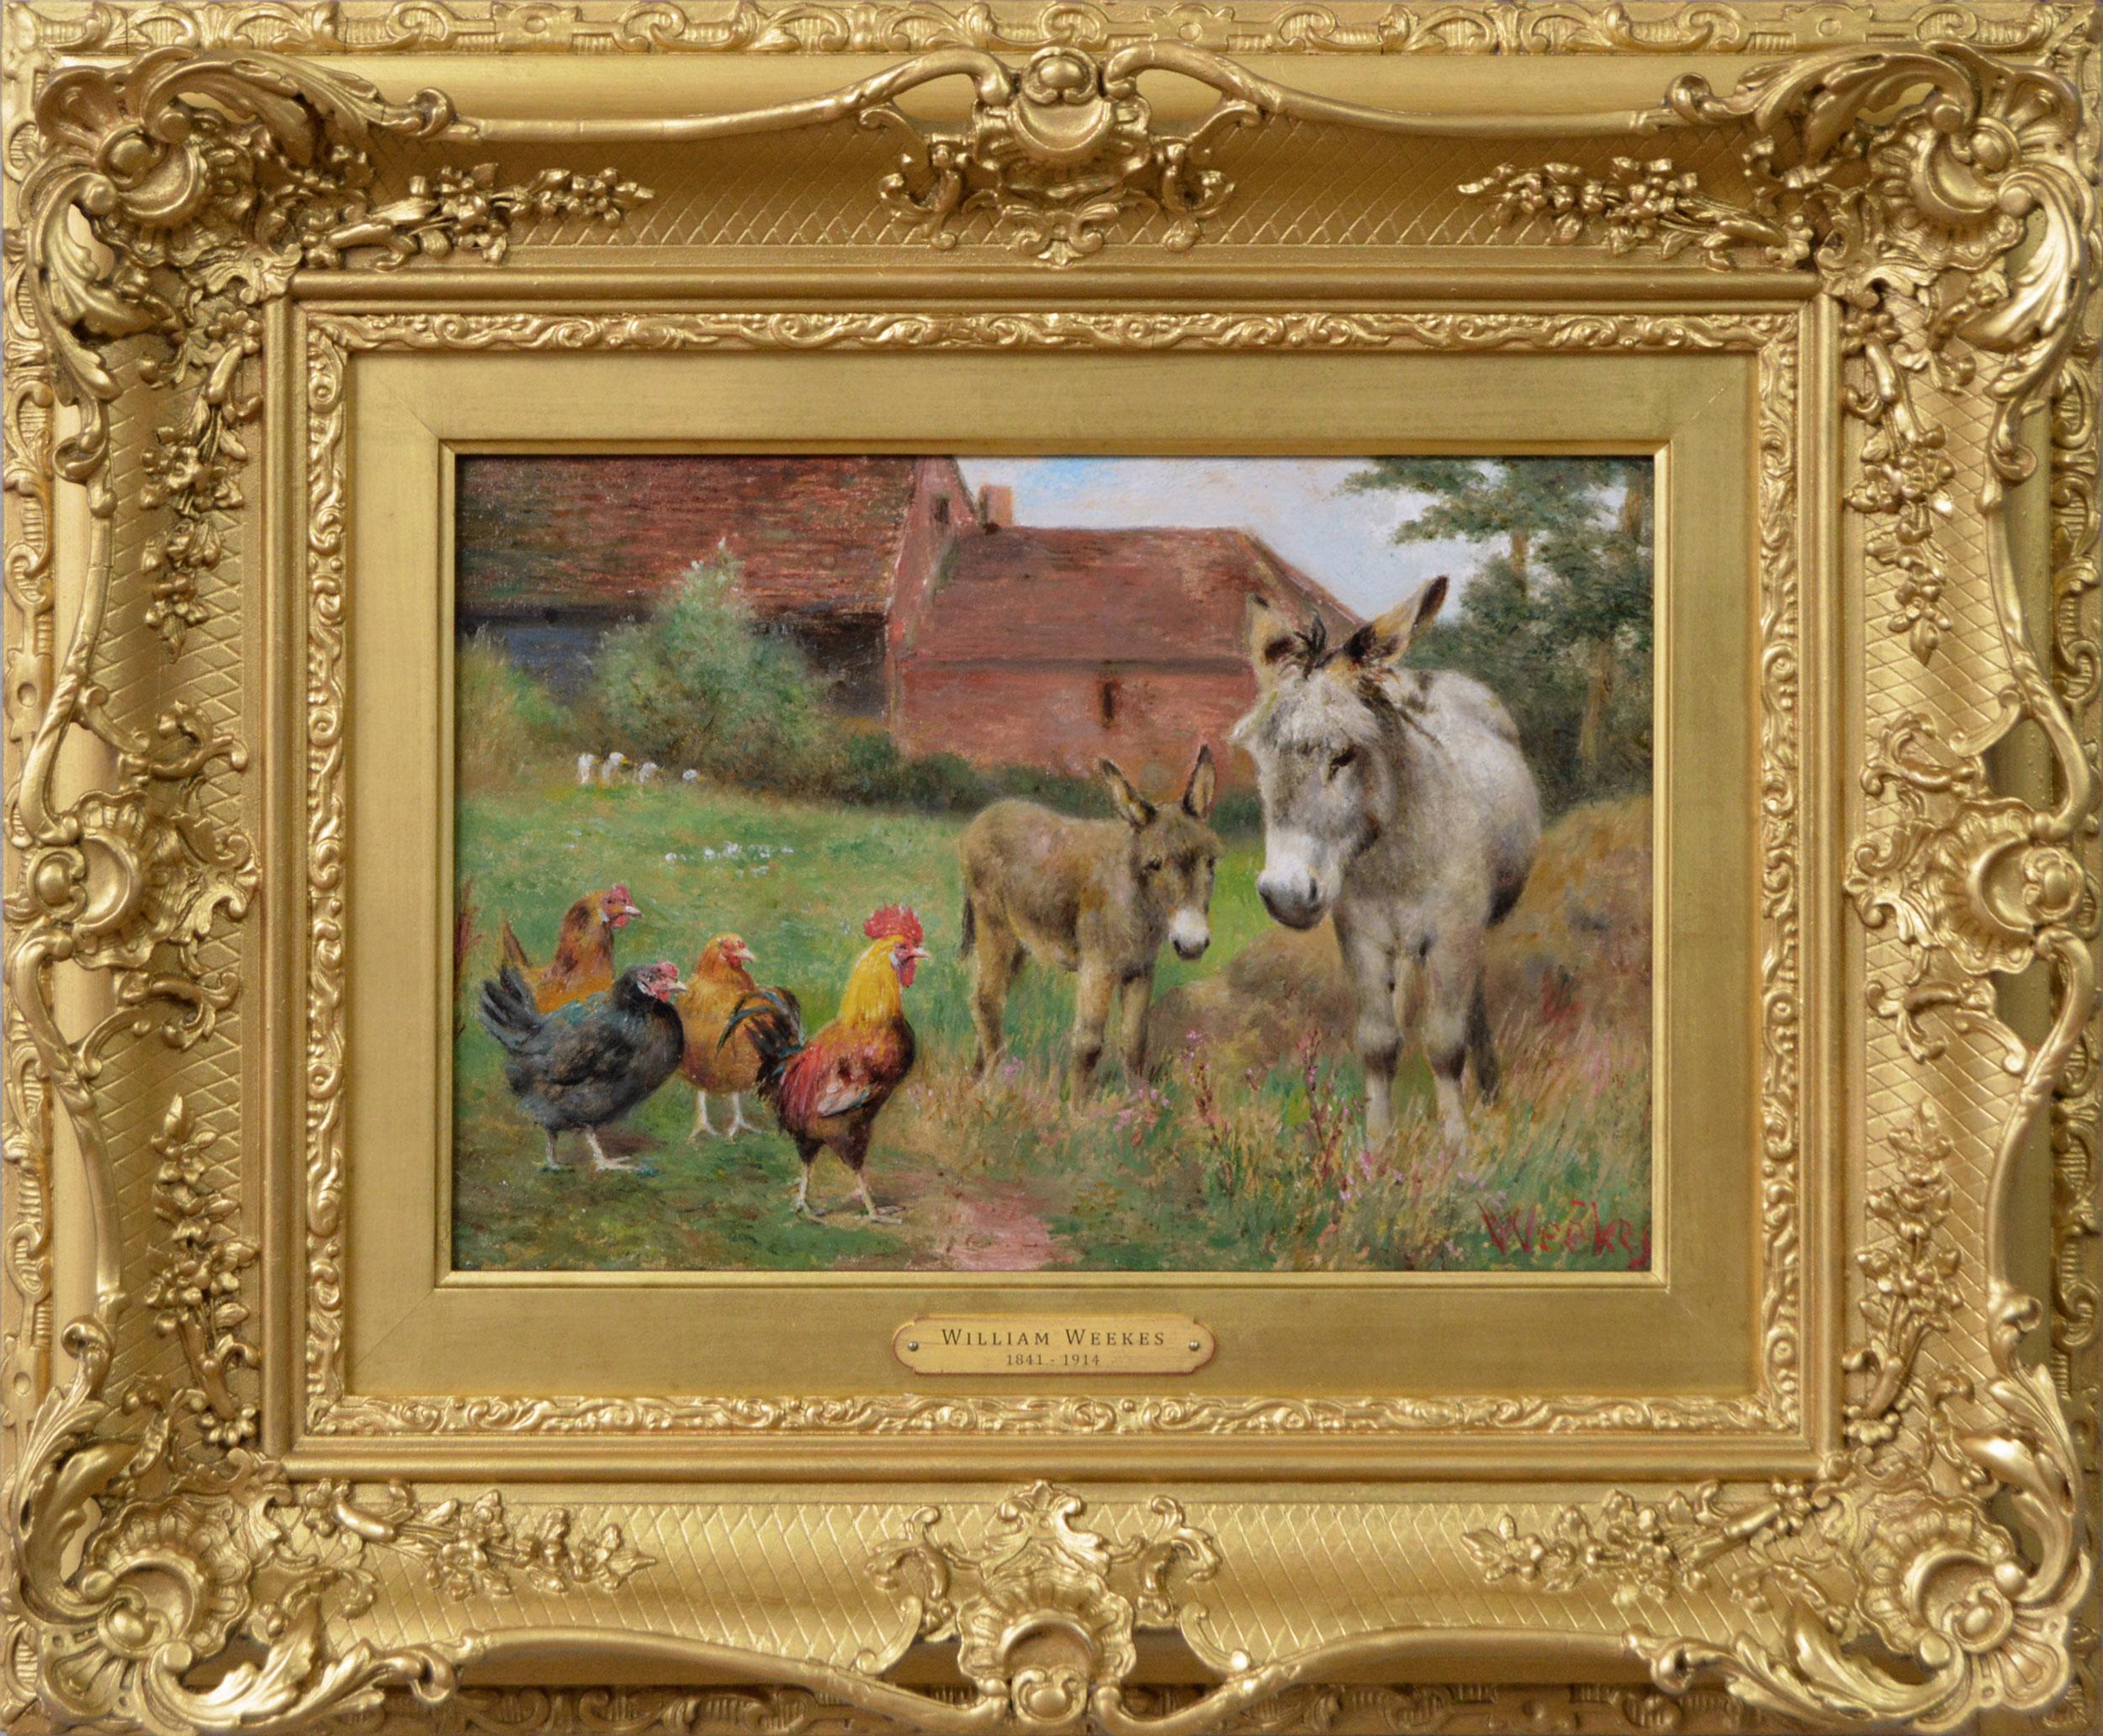 Herbert William Weekes Animal Painting - 19th Century genre animal oil painting of donkeys, hens & a cockerel